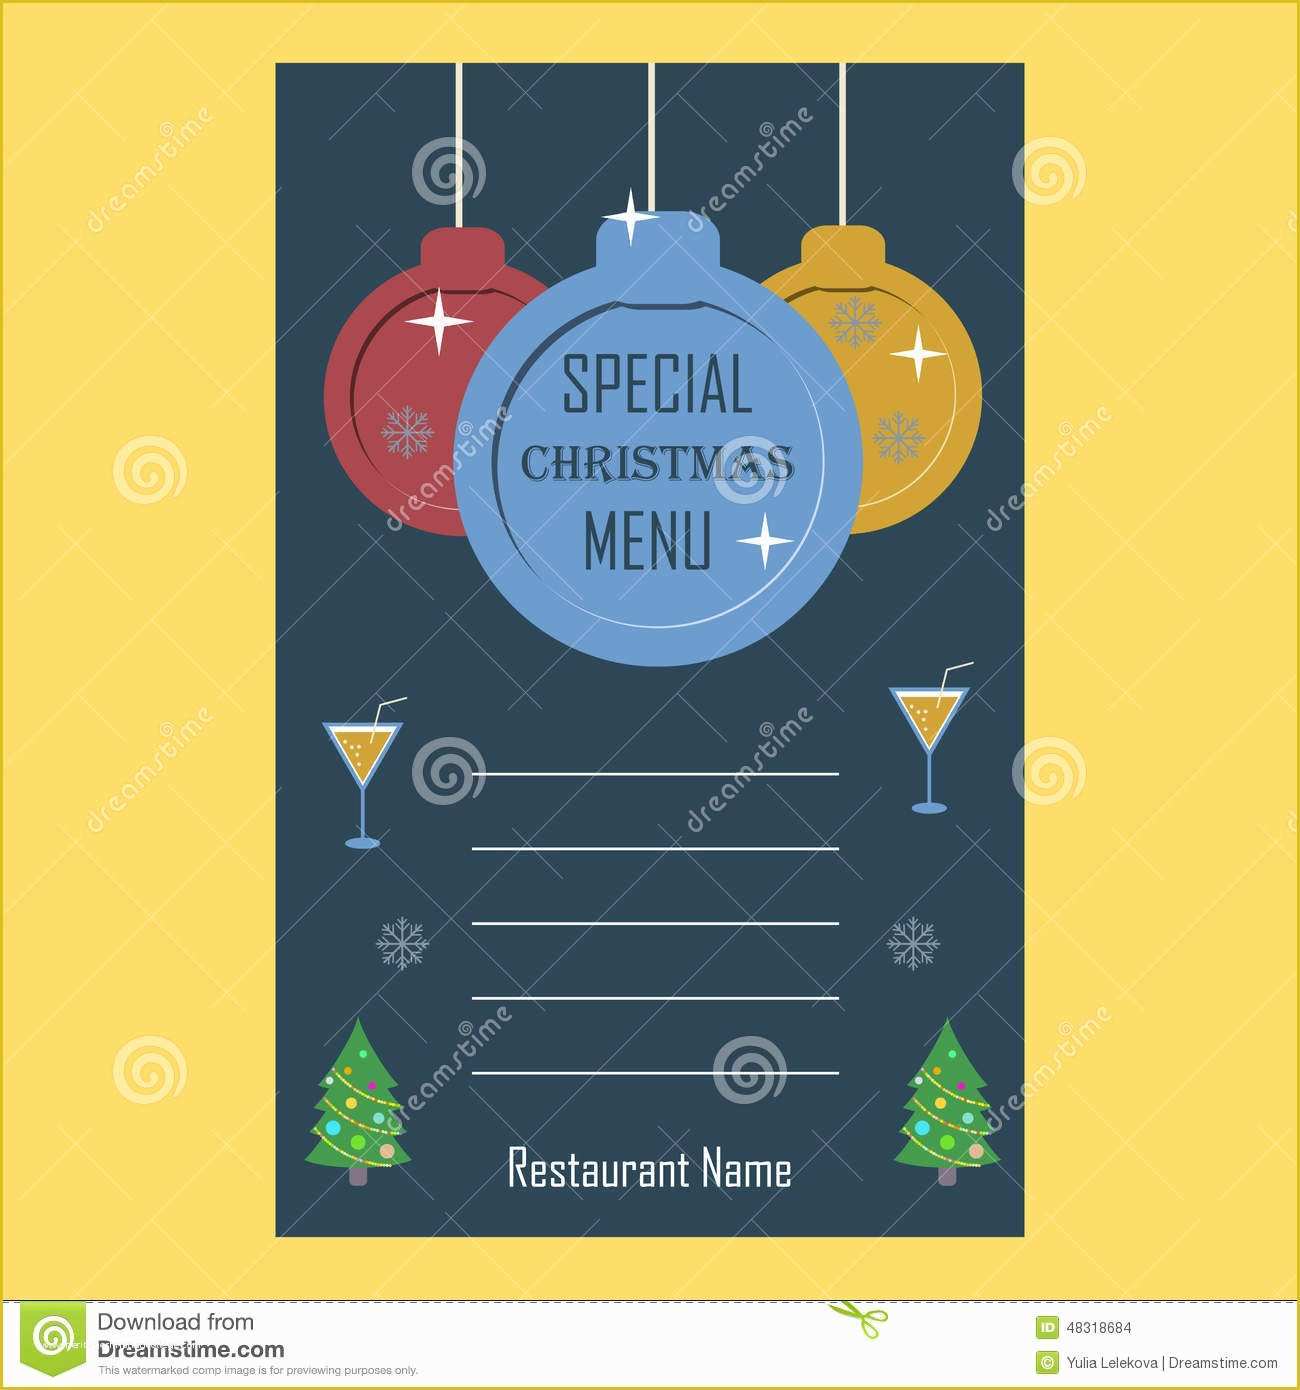 Specials Menu Template Free Of Special Christmas Restaurant Menu Flat Design Template